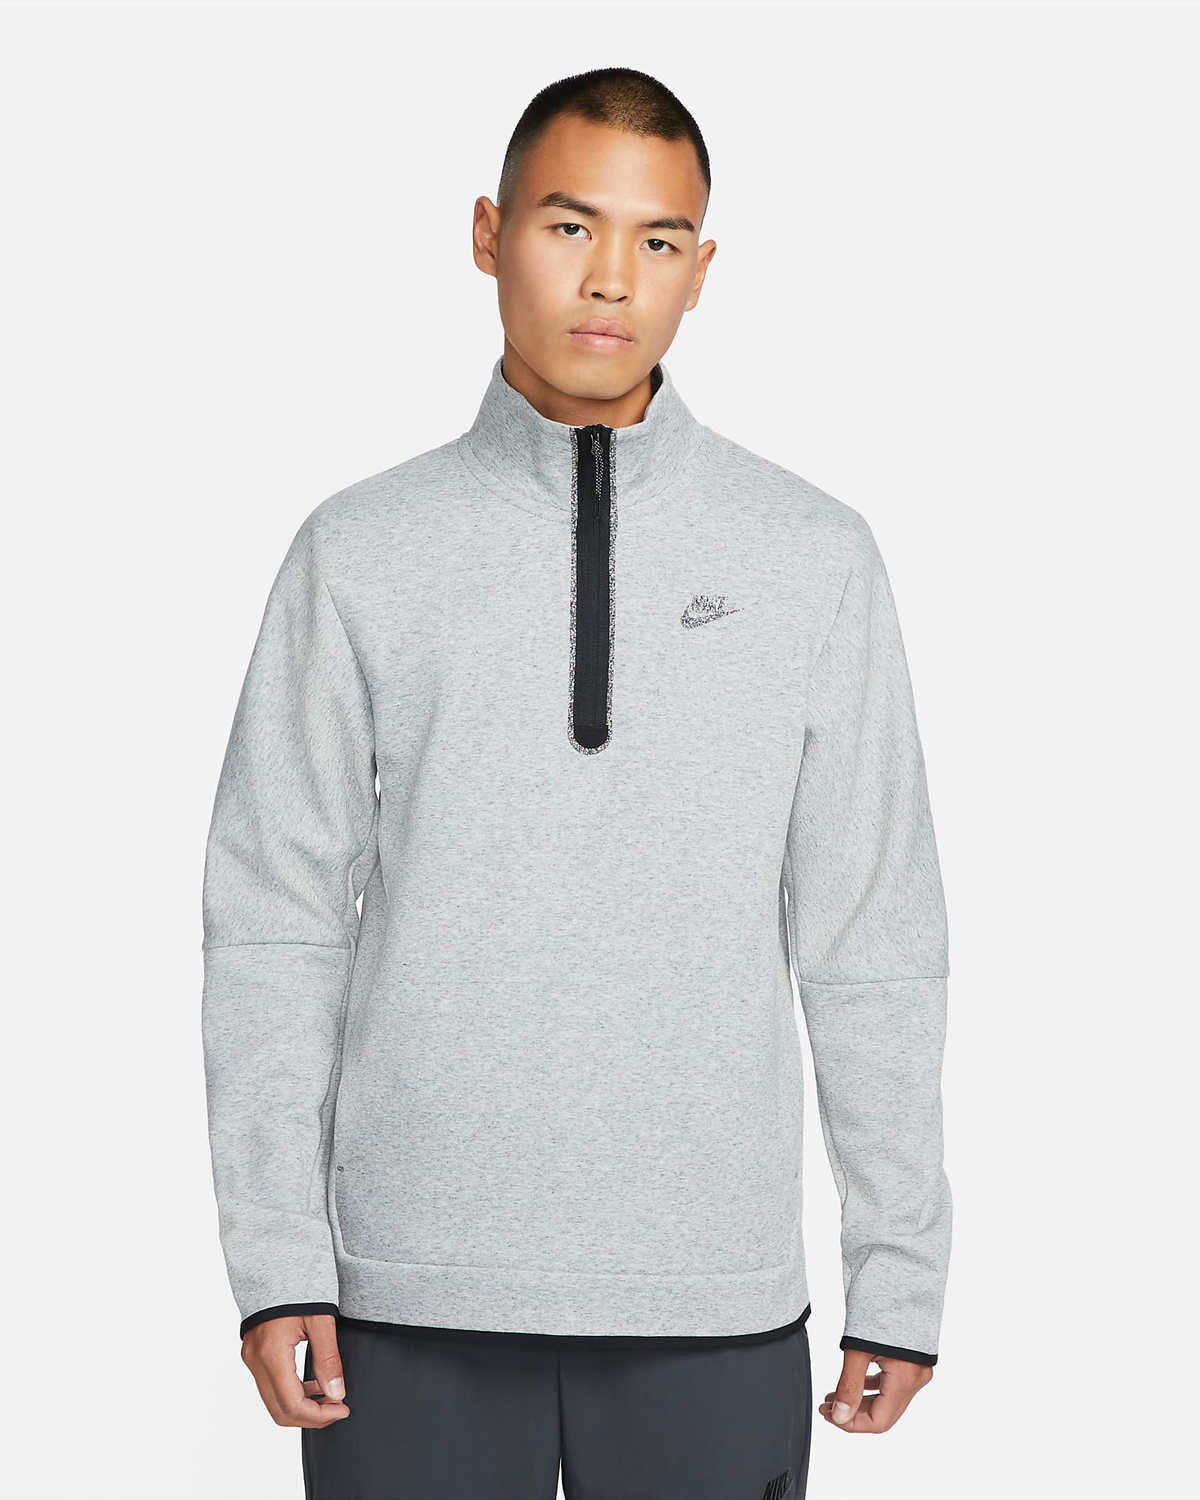 Nike-Tech-Fleece-Hlaf-Zip-Top-Grey